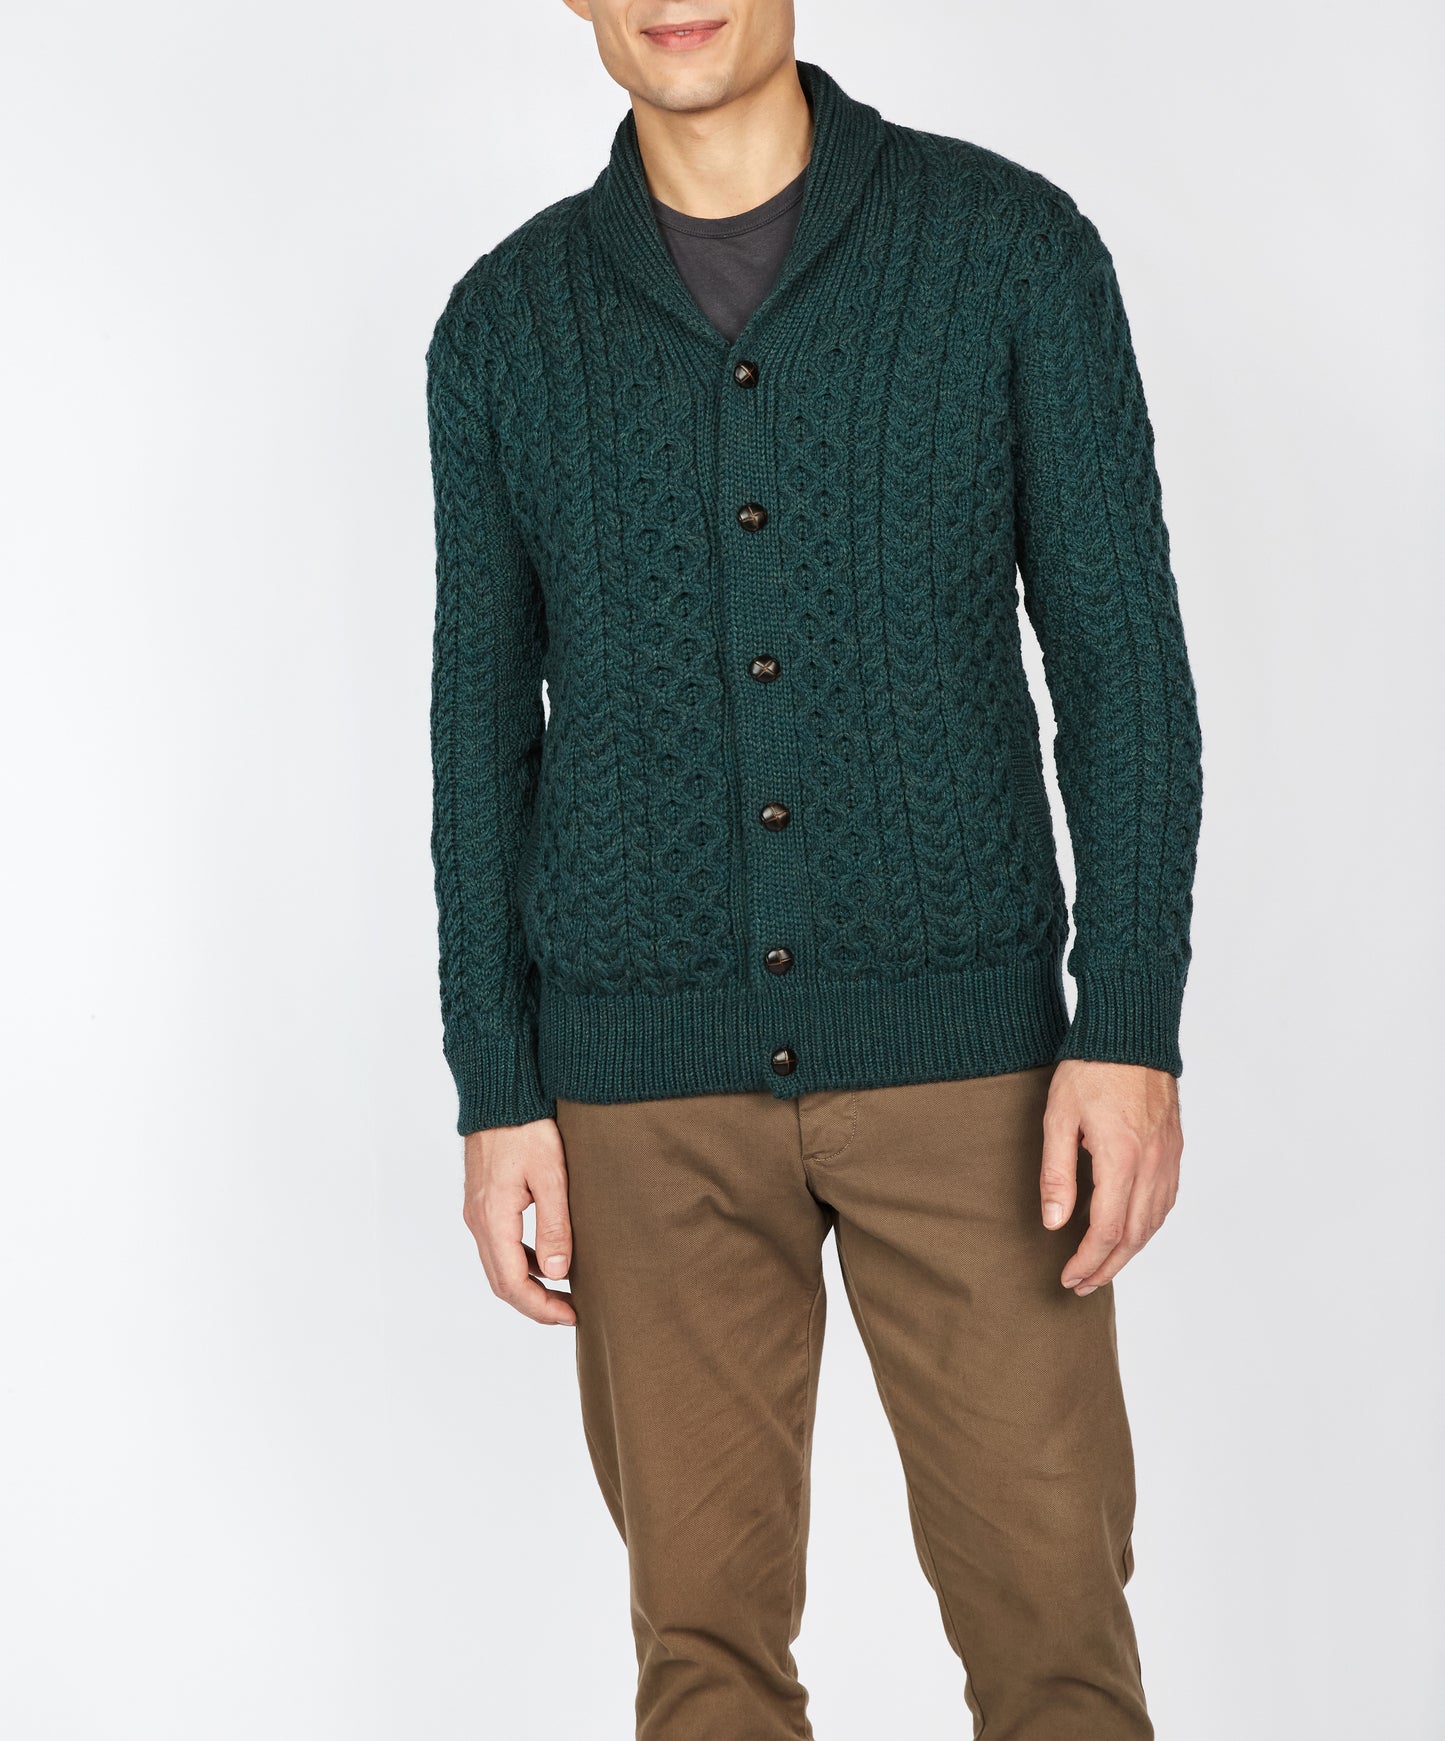 IrelandsEye Knitwear 'Woodford' Aran Cardigan in Evergreen Merino